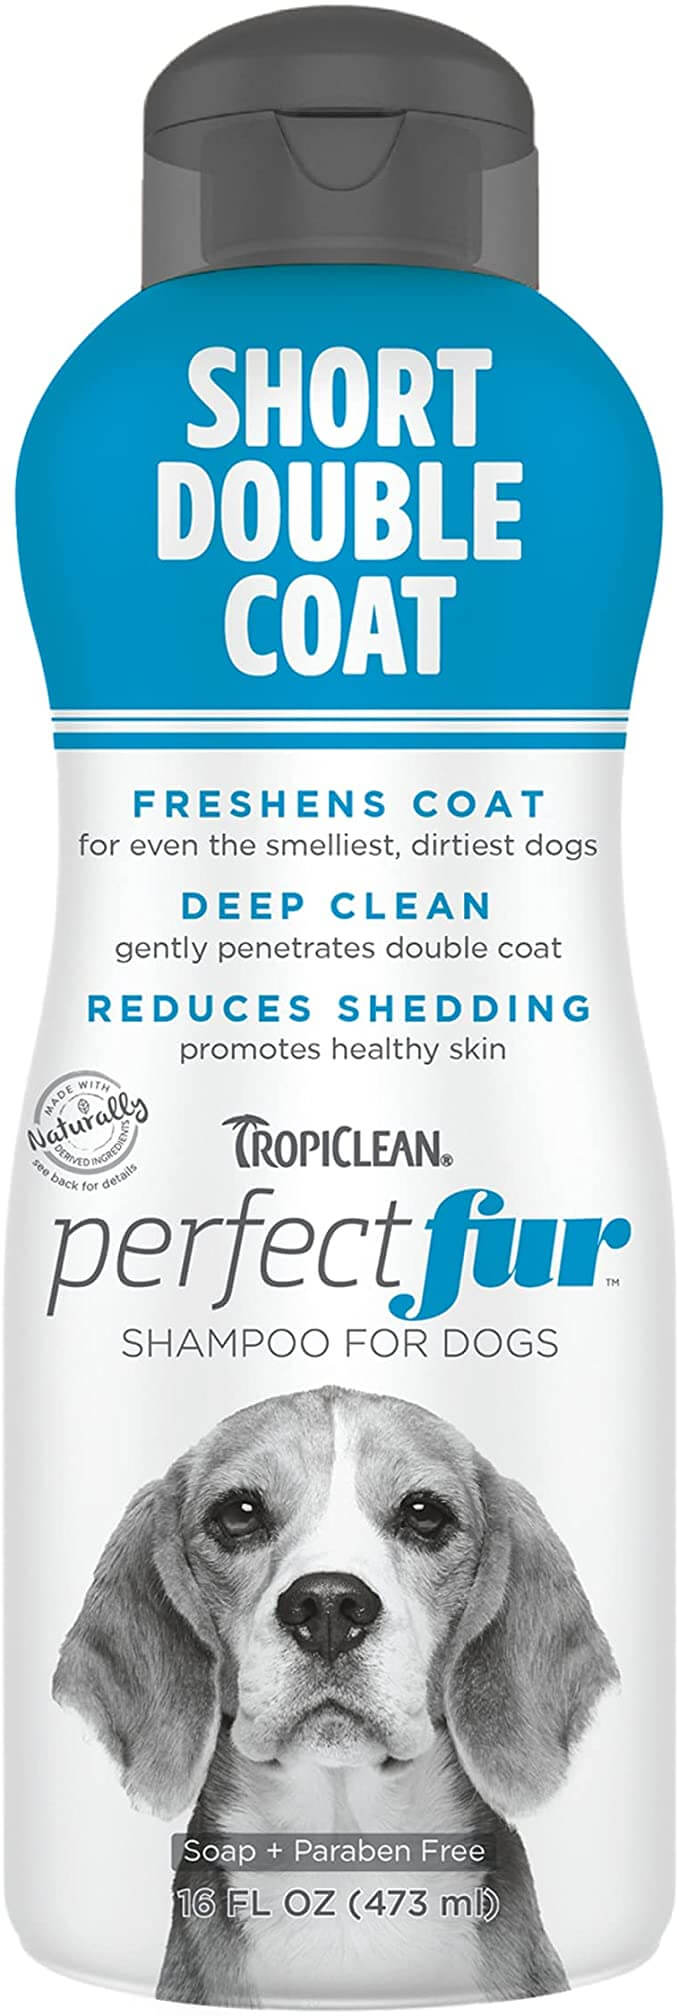 TropiClean PerfectFur Double Coat Shampoo